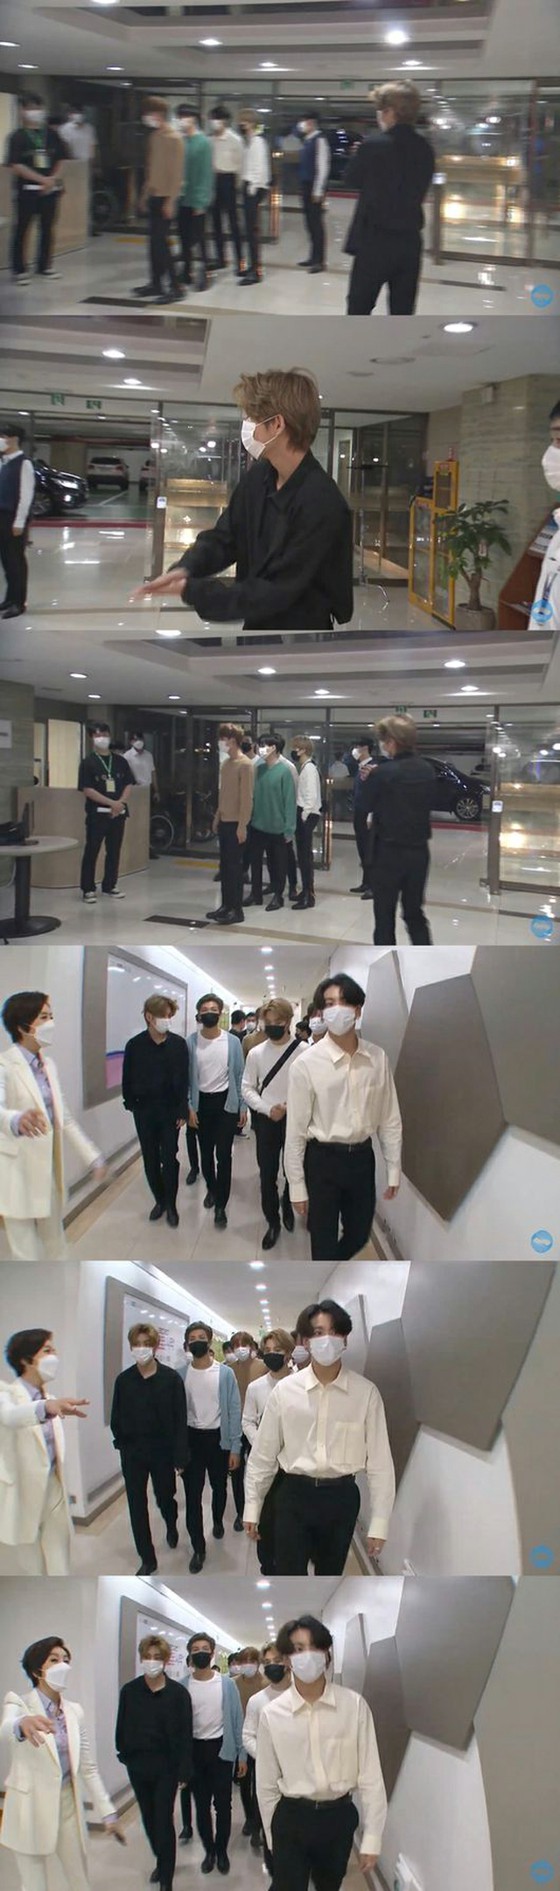 Kunjungan "BTS", KBS "News 9" tiba untuk bekerja Pemandangan juga Topik Hangat Kehadiran "Billboard No. 1" yang berisik